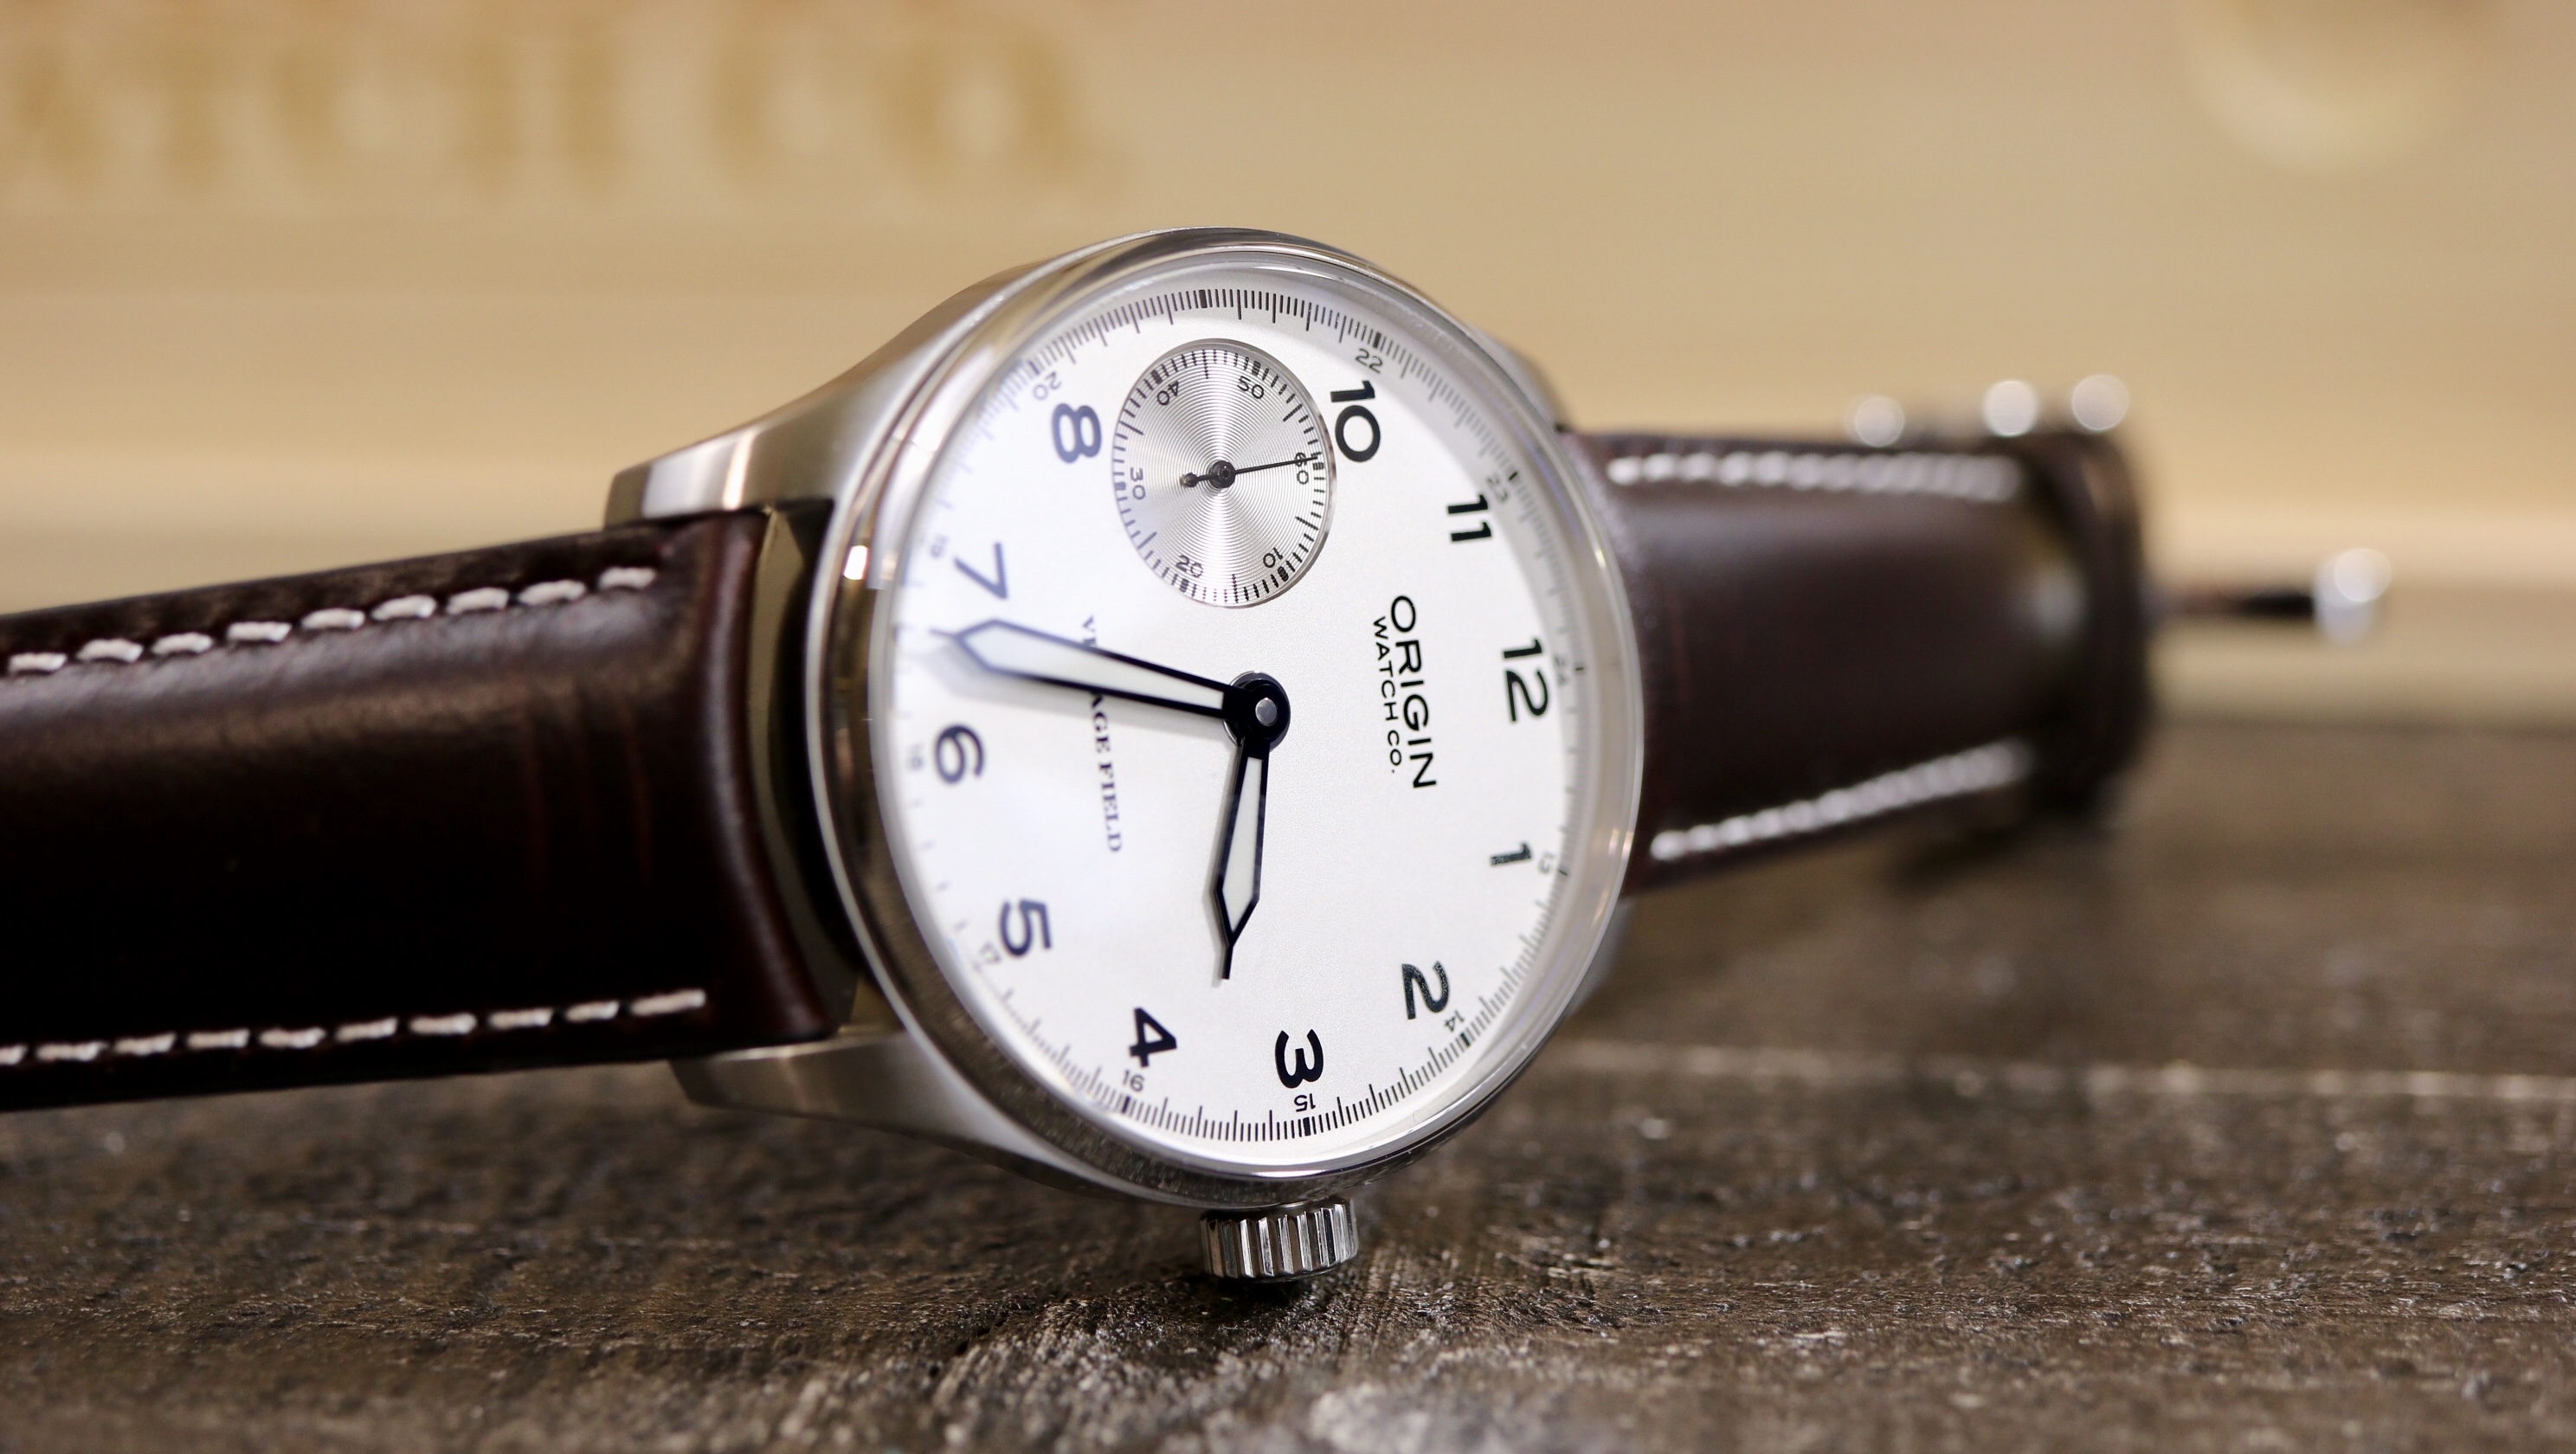 Watch in original. TPW Classic field watch. Origin watch. Watch co. Simple watch co..